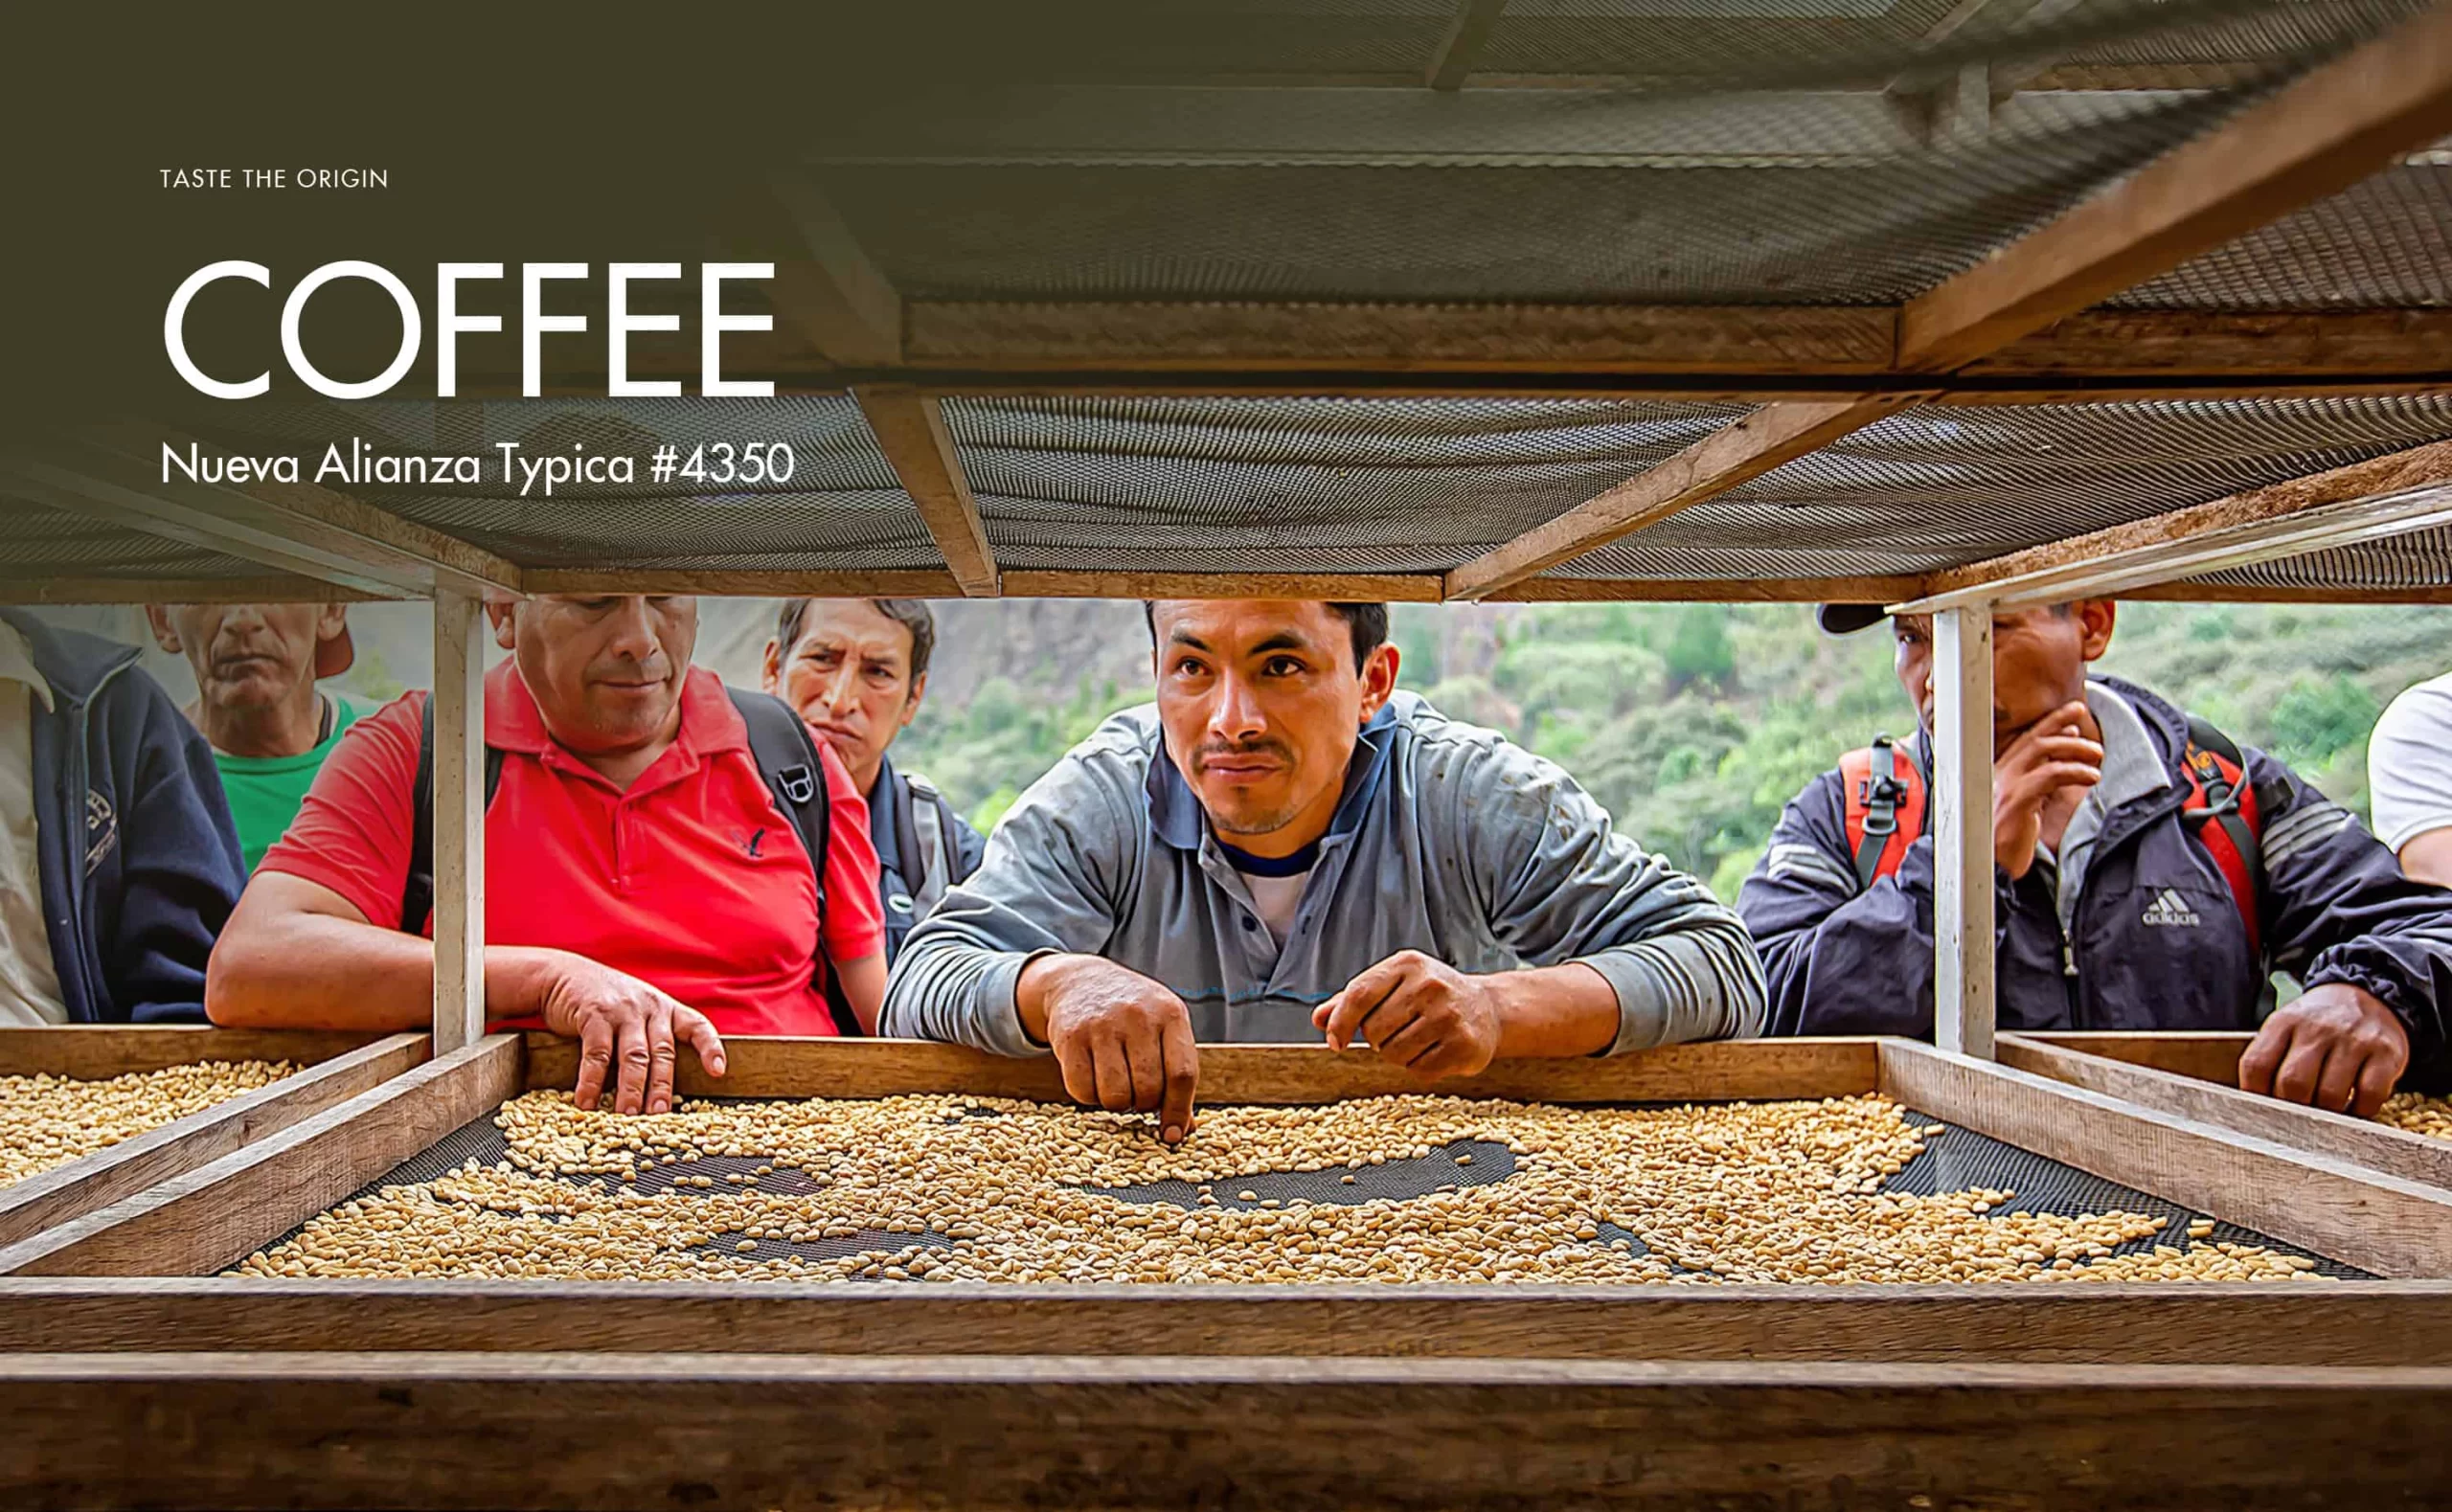 Nueva Alianza Typica #4350 Coffee – The bright spot of SantaTeresa farmers on the sustainable coffee journey